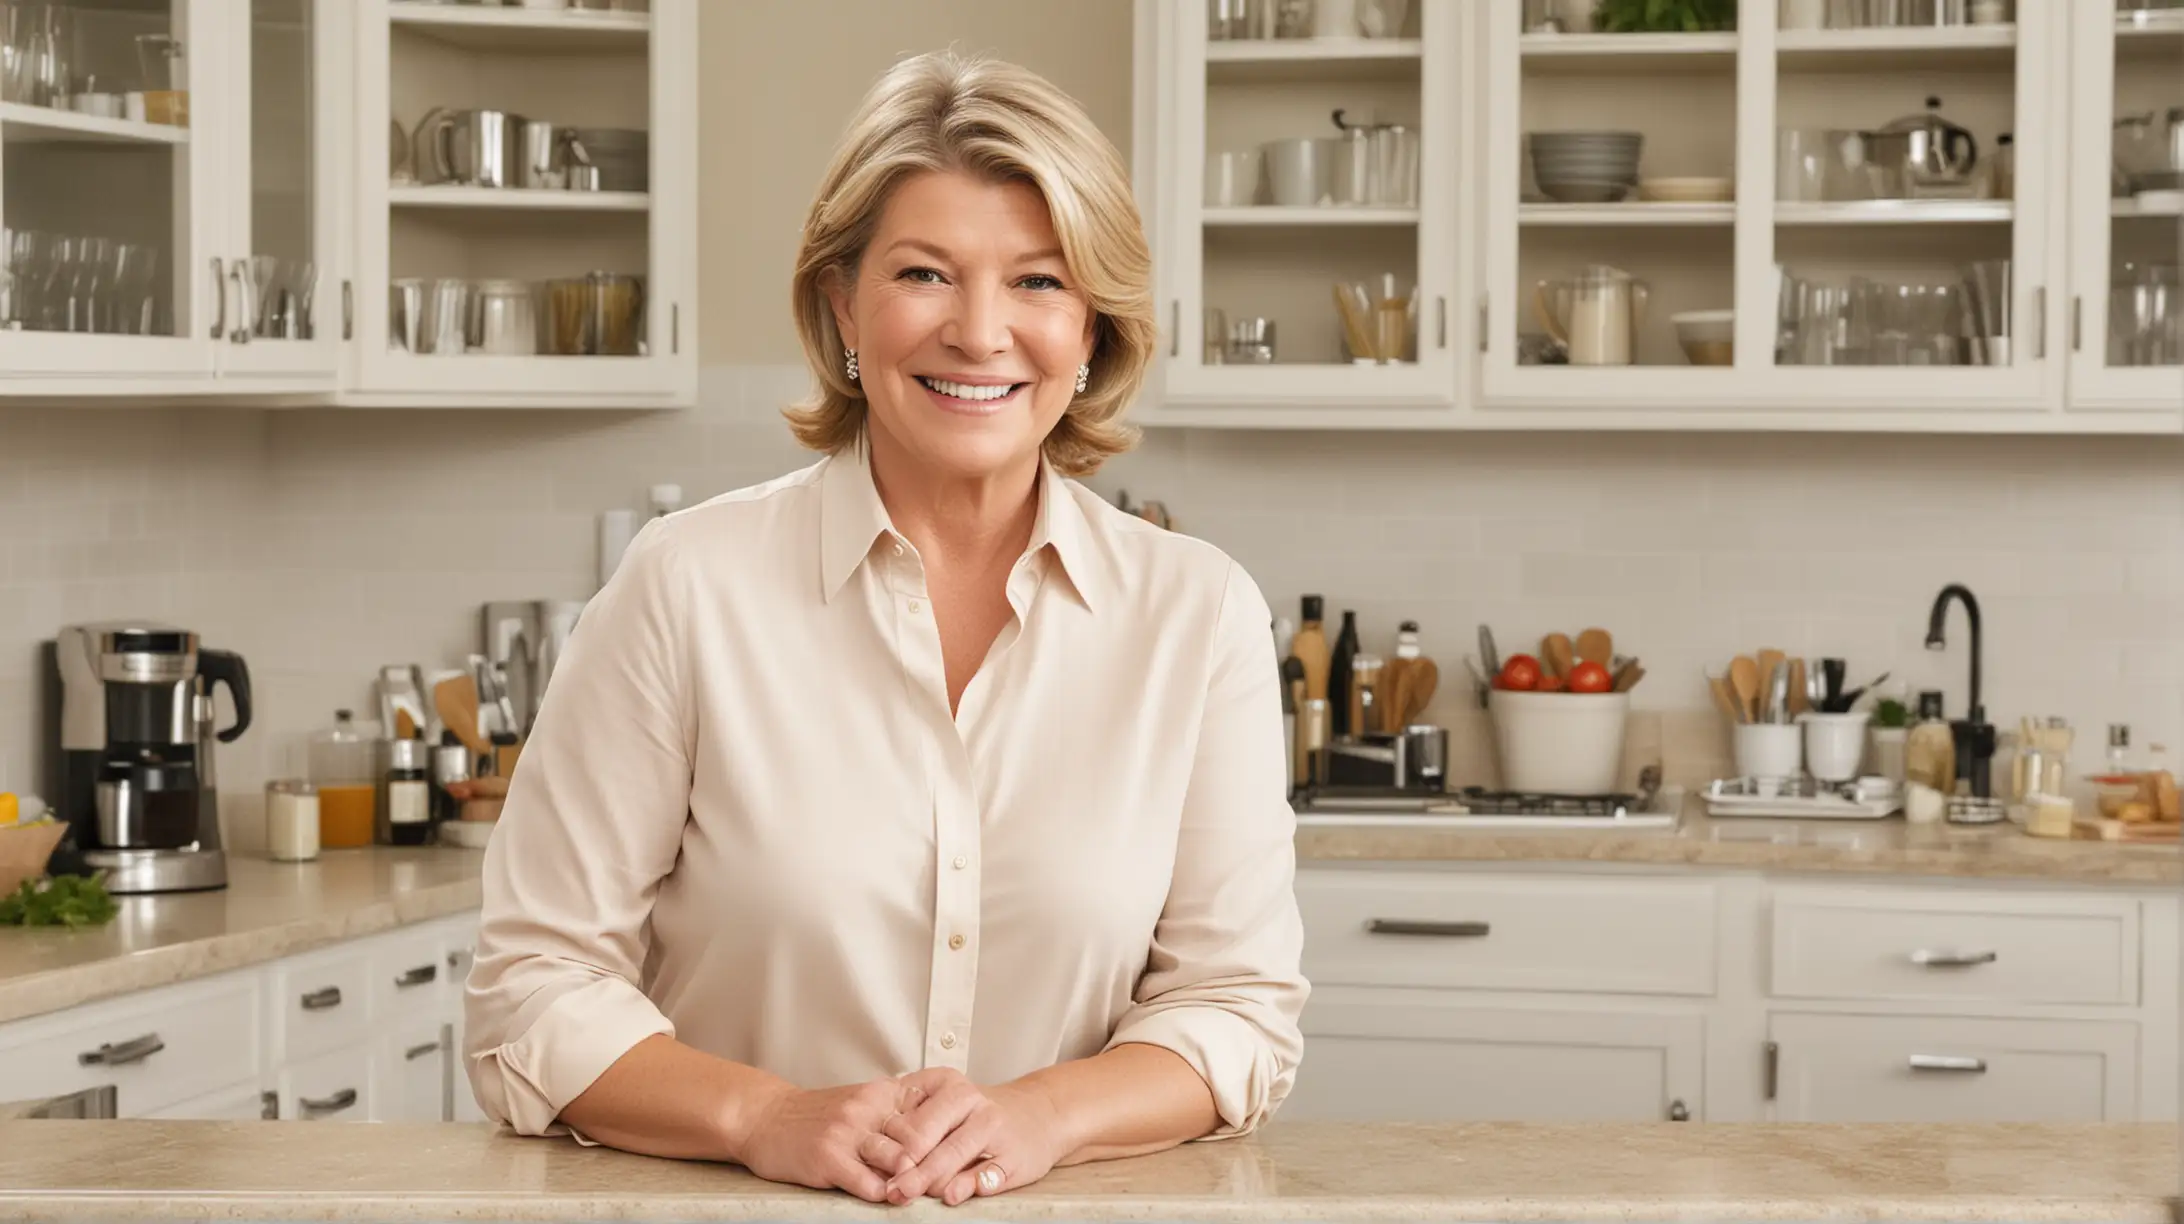 Happy Martha Stewart Look Alike Cooking in a Sunlit Kitchen